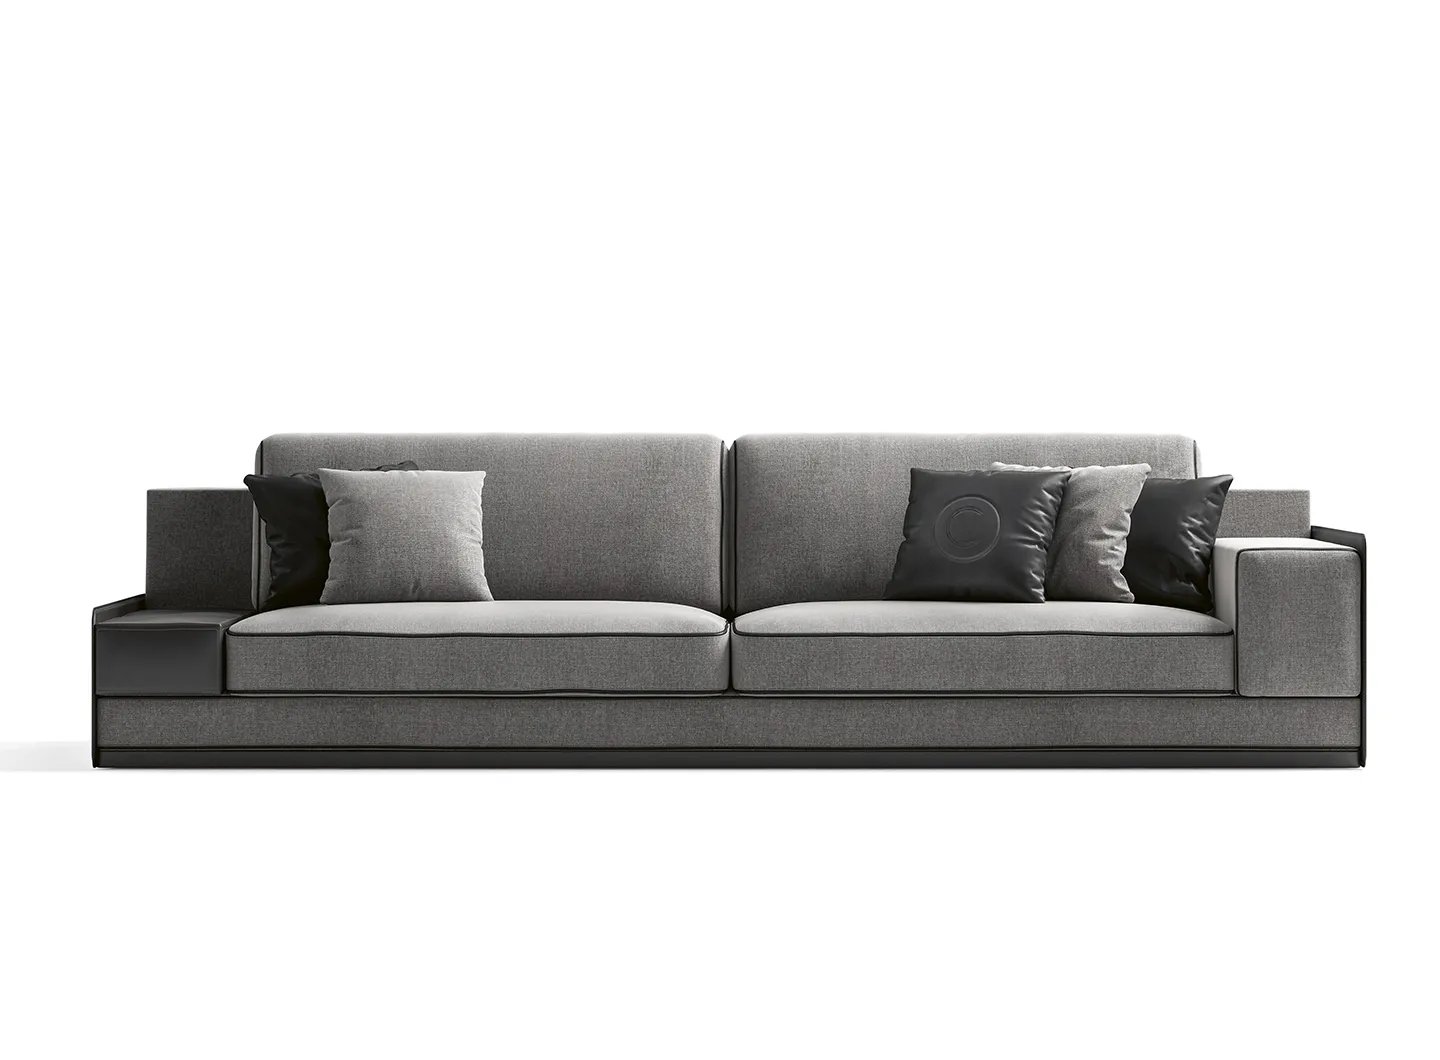 CPRN Homood-3 seater sofa